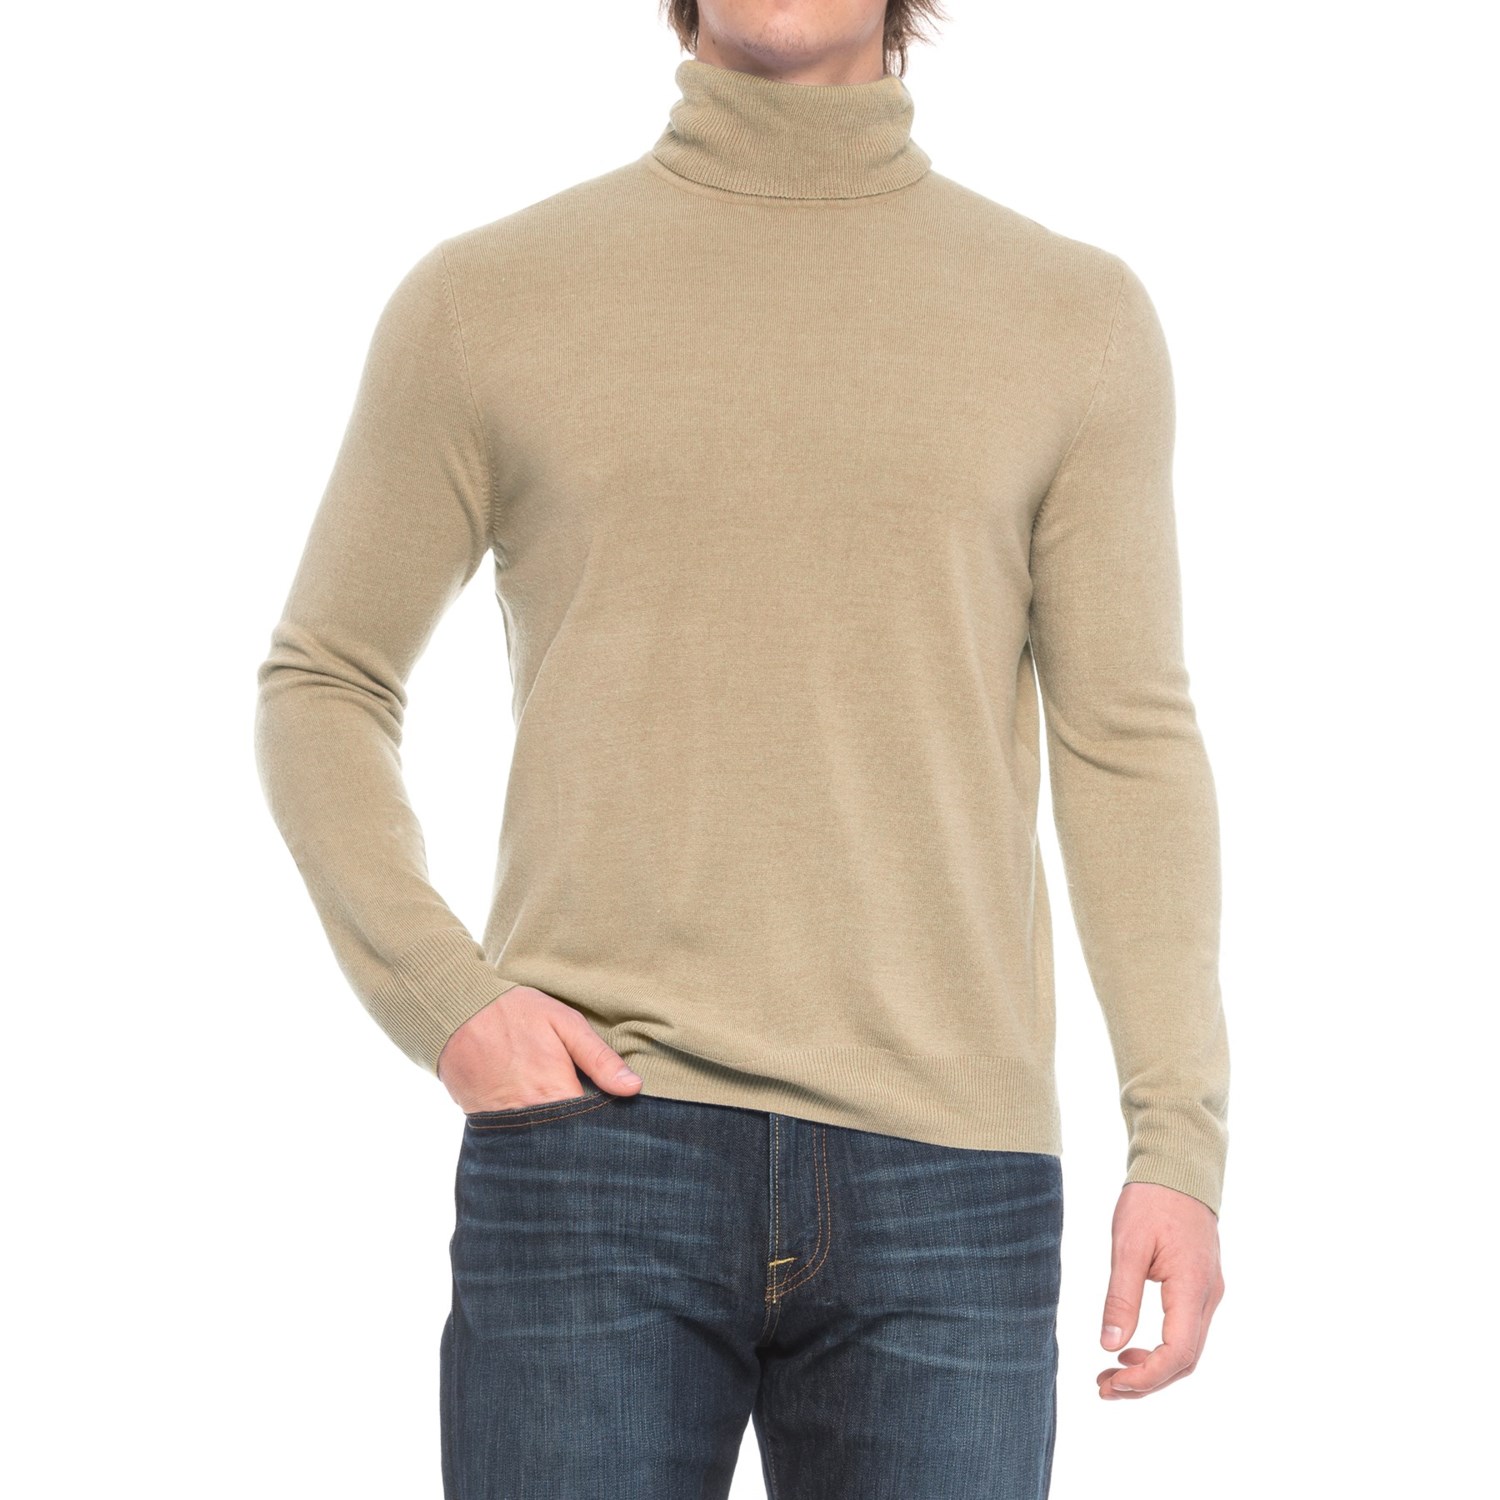 Solid Turtleneck Sweater (For Men) - Save 66%